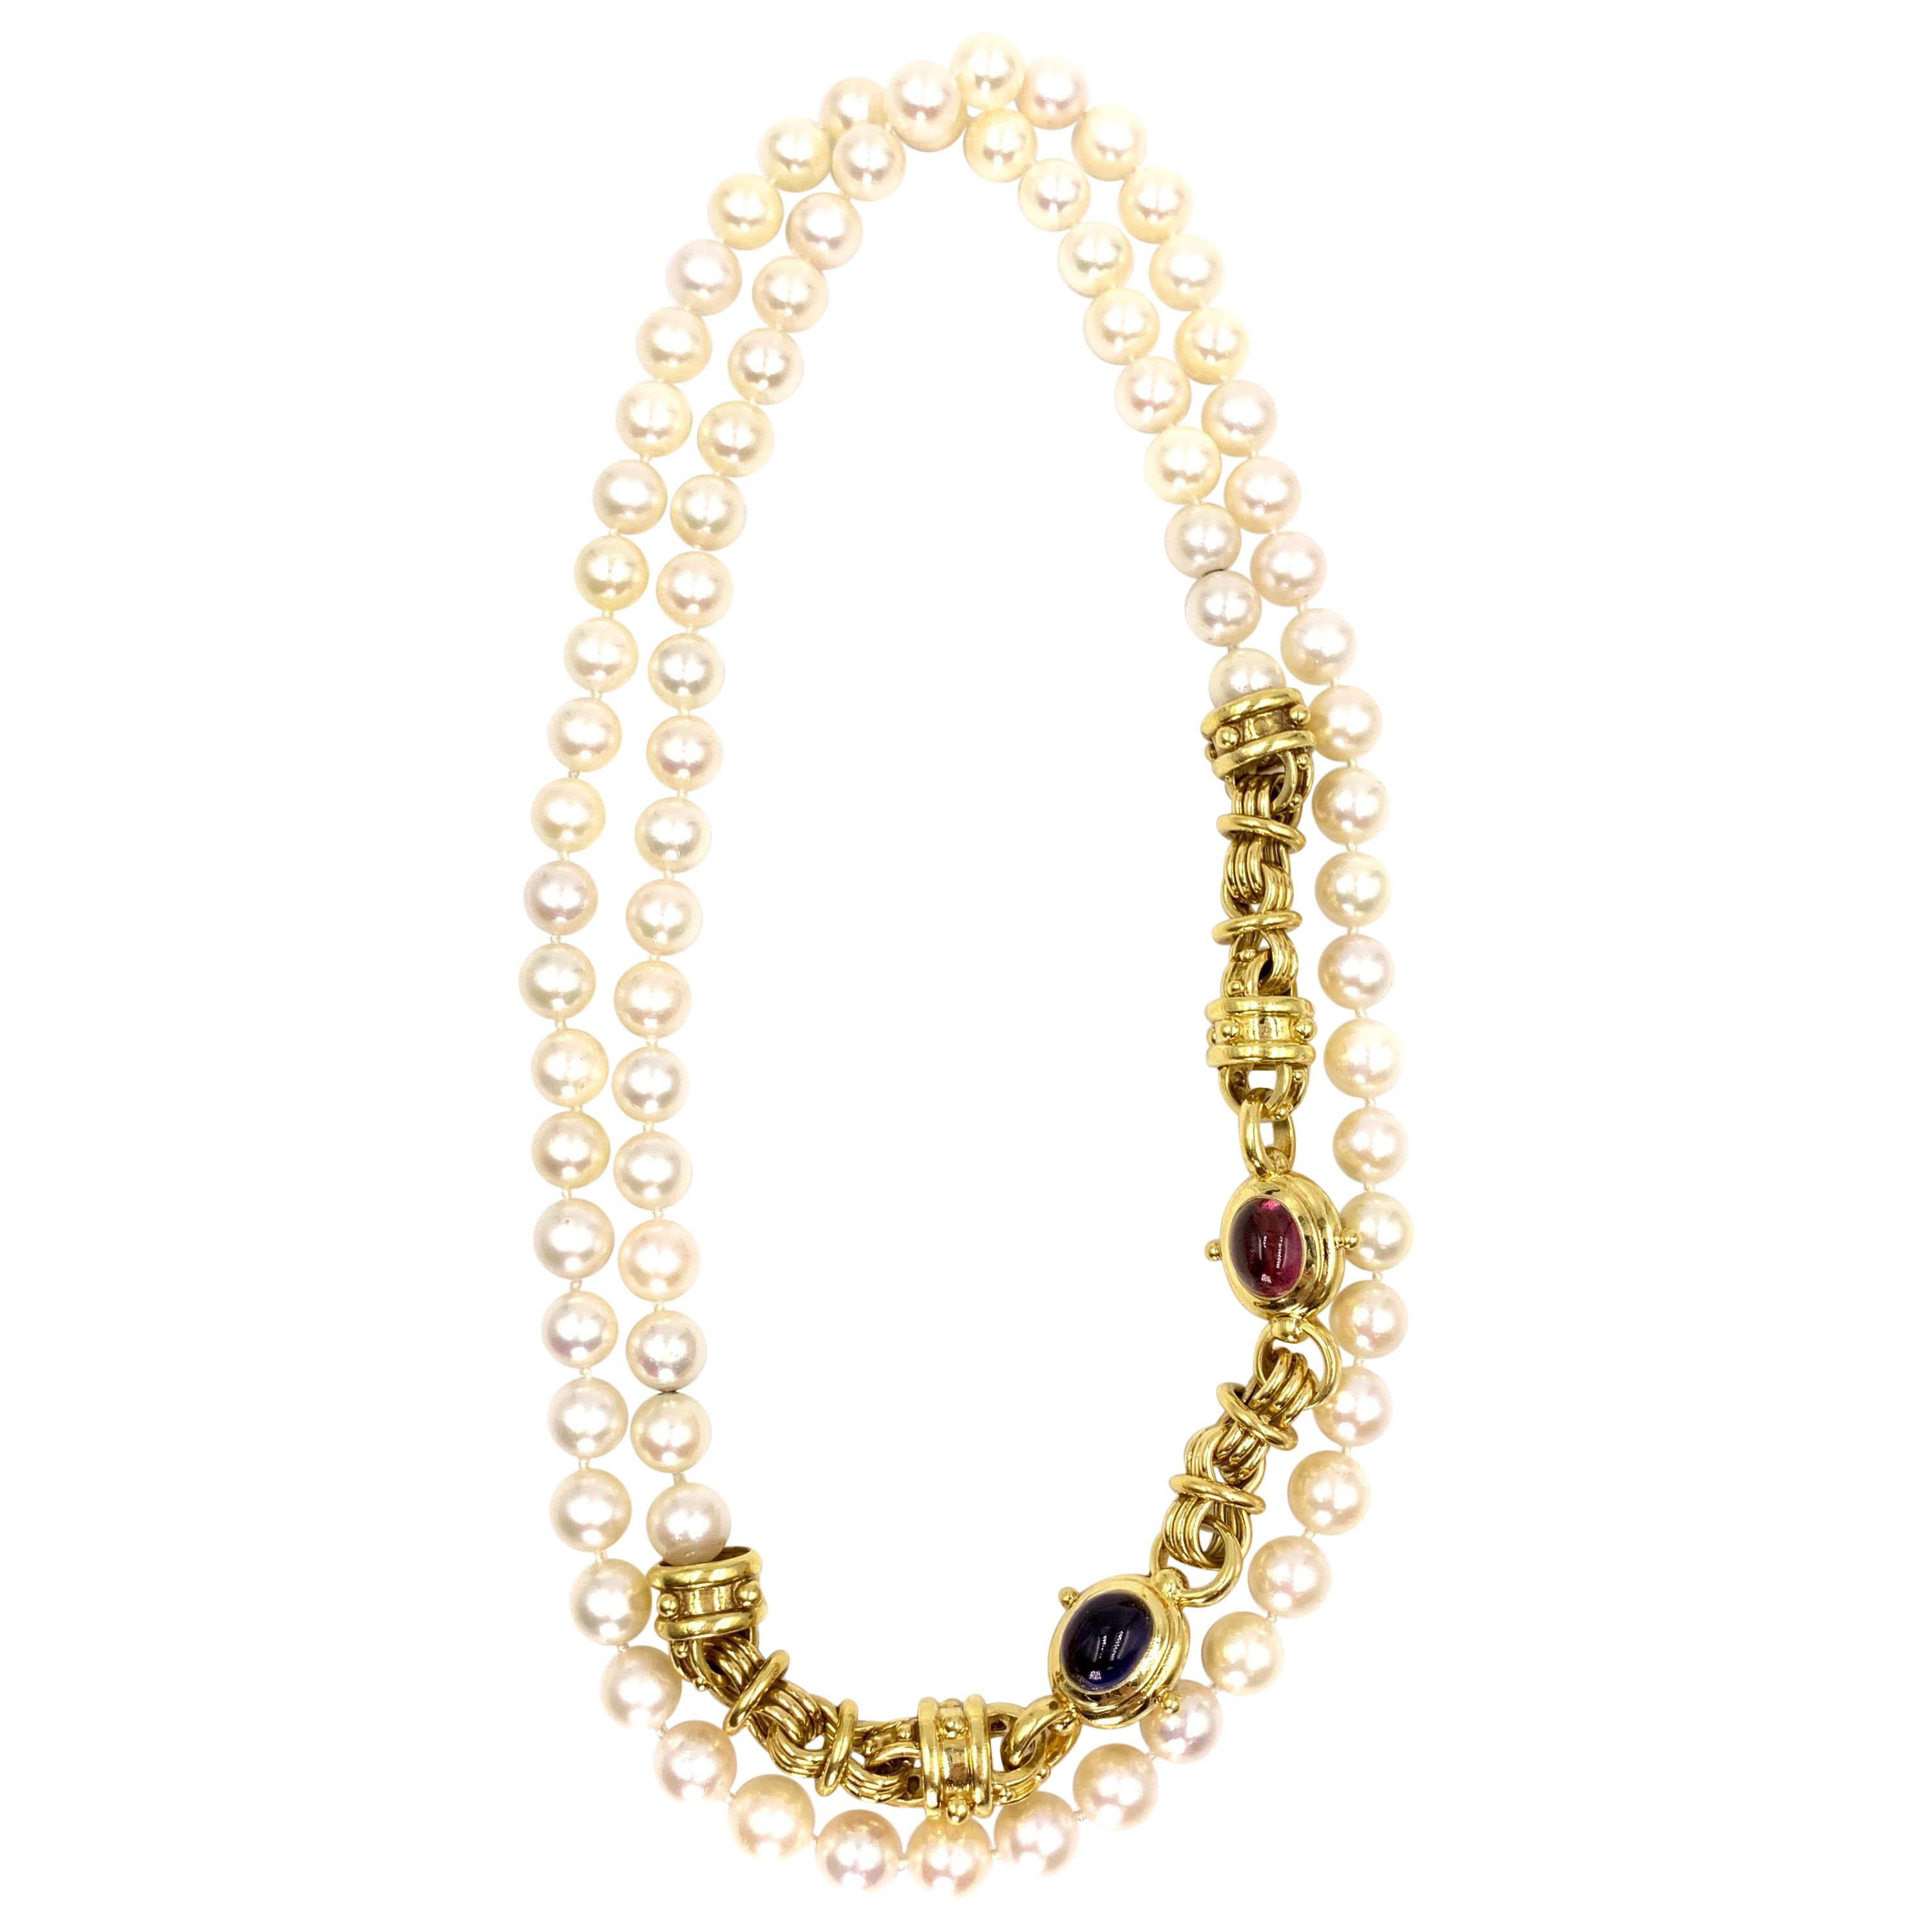 Long Cultured Pearl Necklace with Detachable 18 Karat Gemstone Bracelet